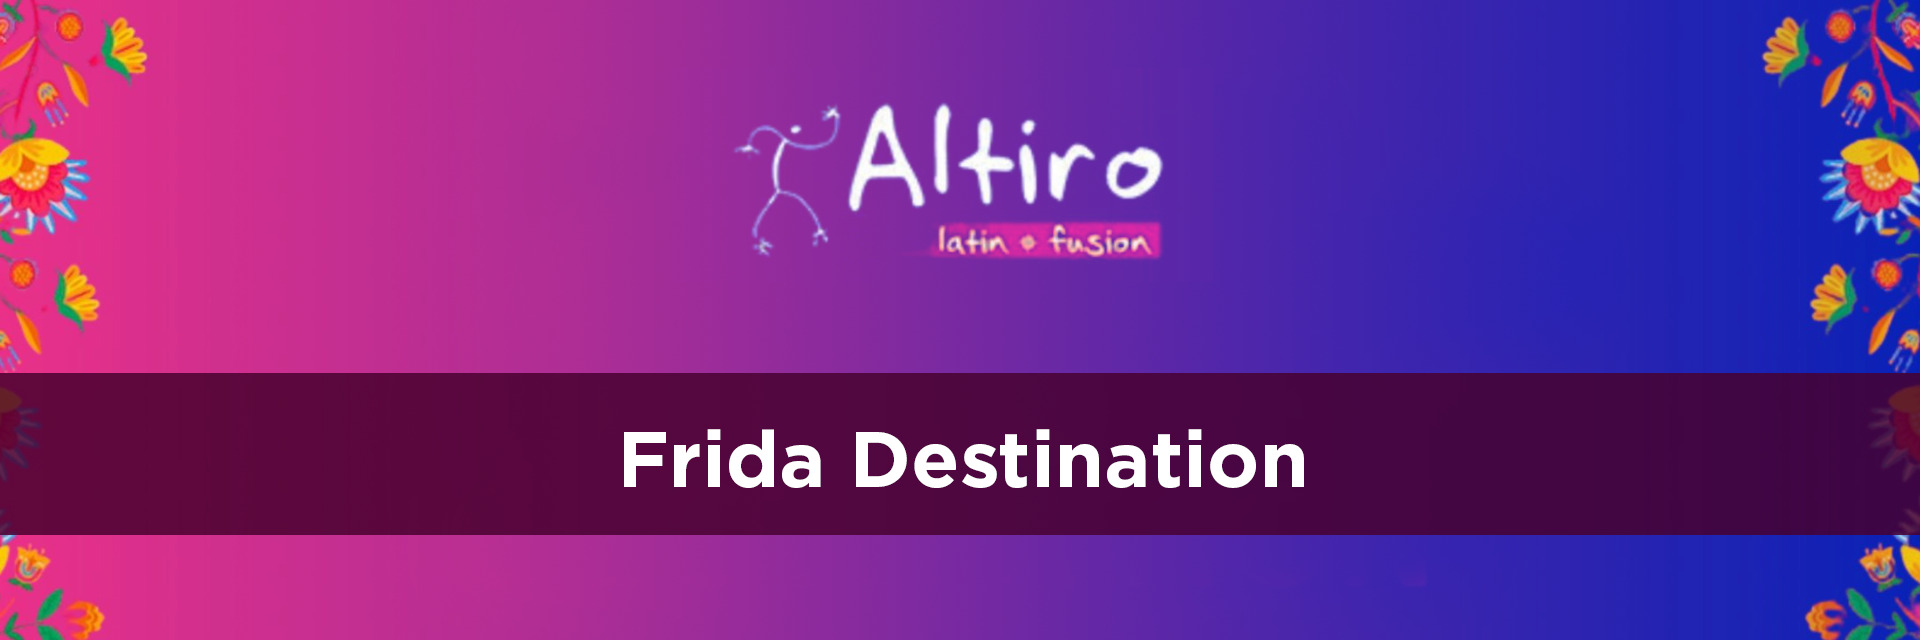 Frida Destination